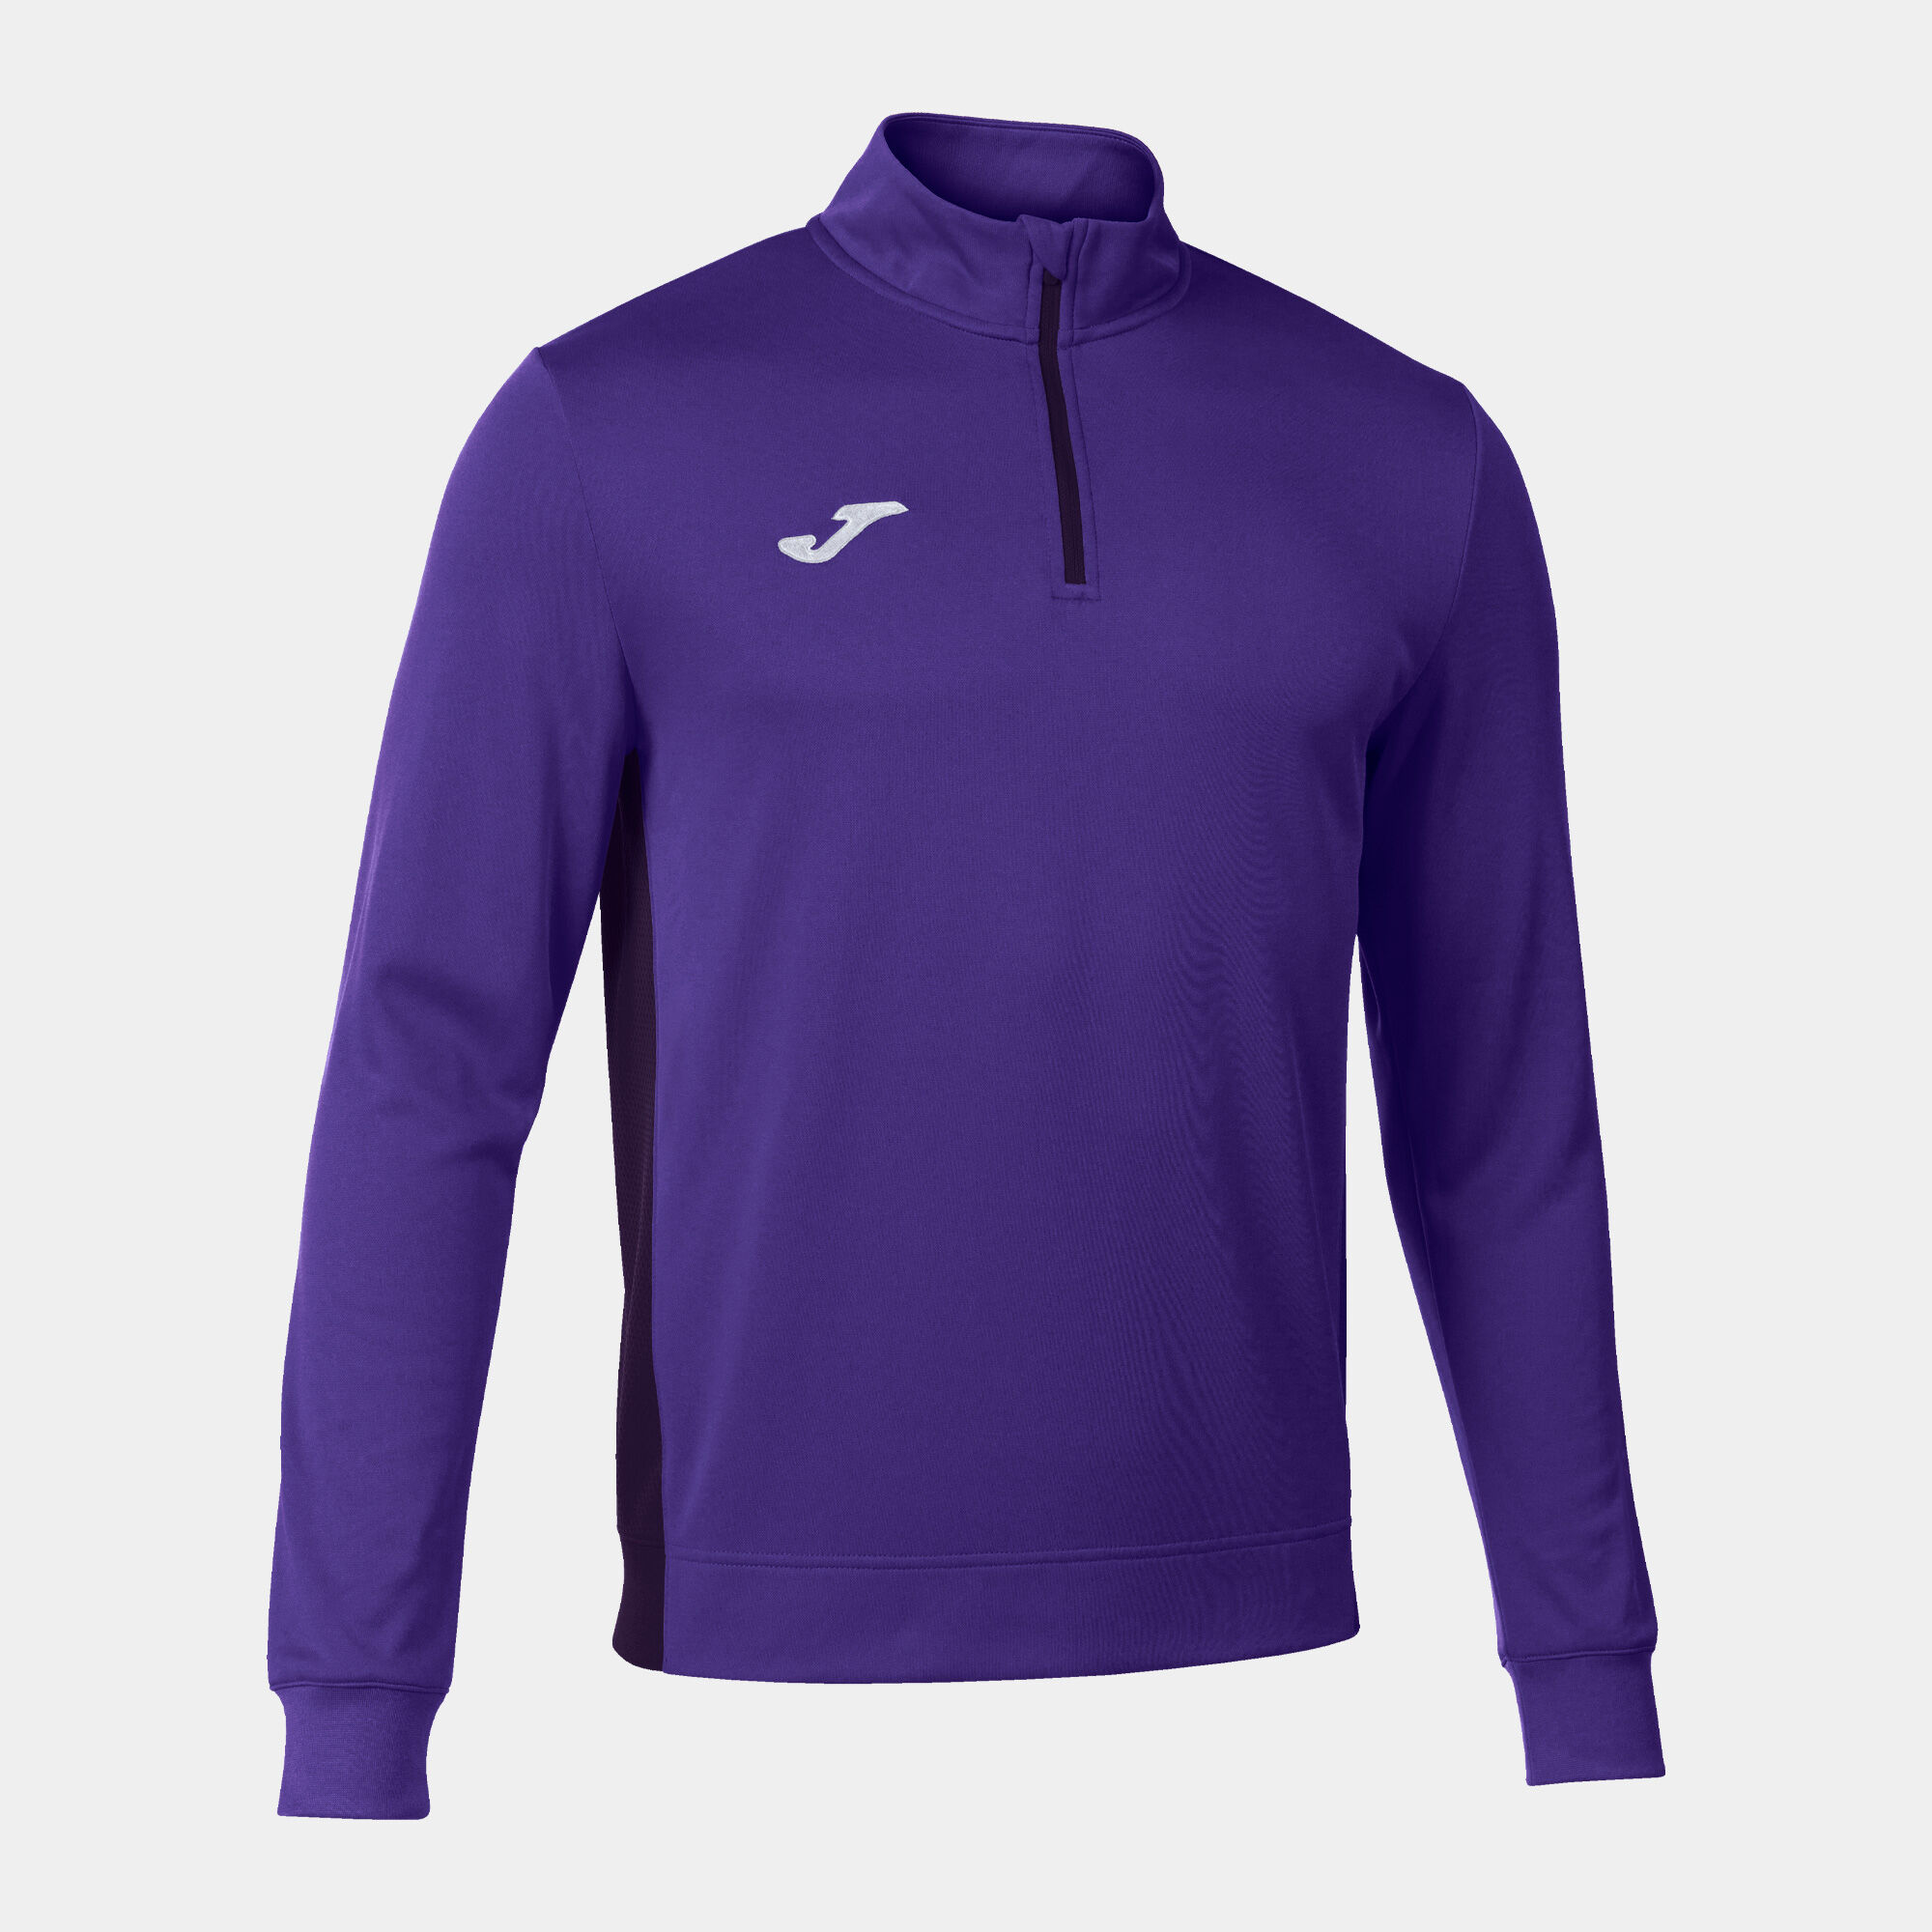 Sweat-shirt homme Winner II violet